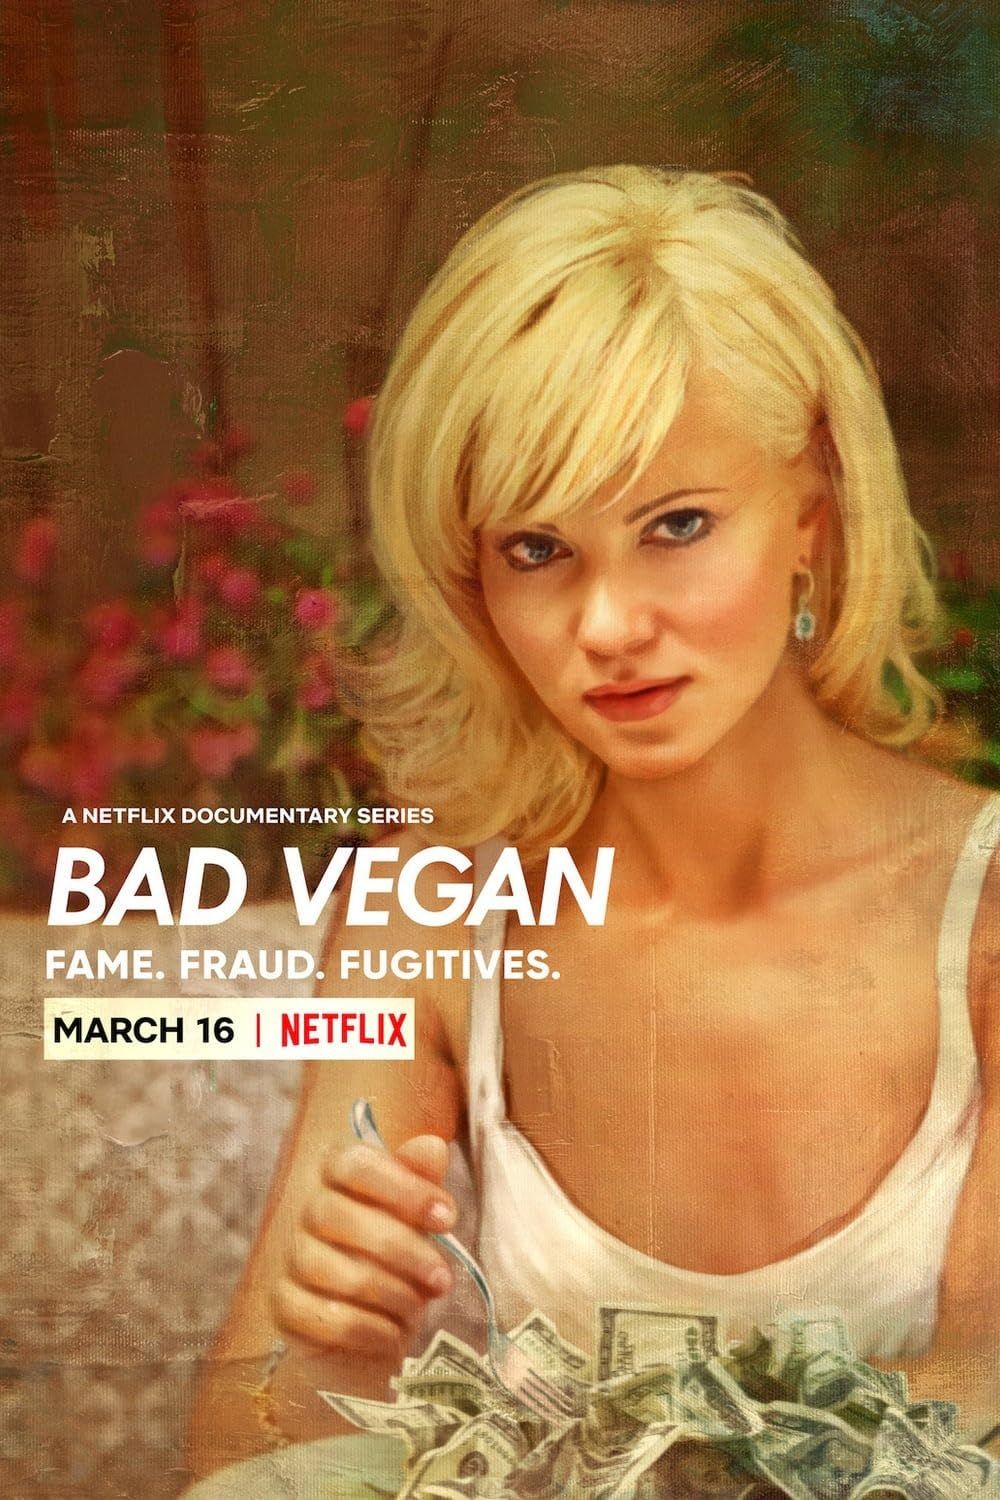 Bad Vegan- Fame. Fraud. Fugitives. poster